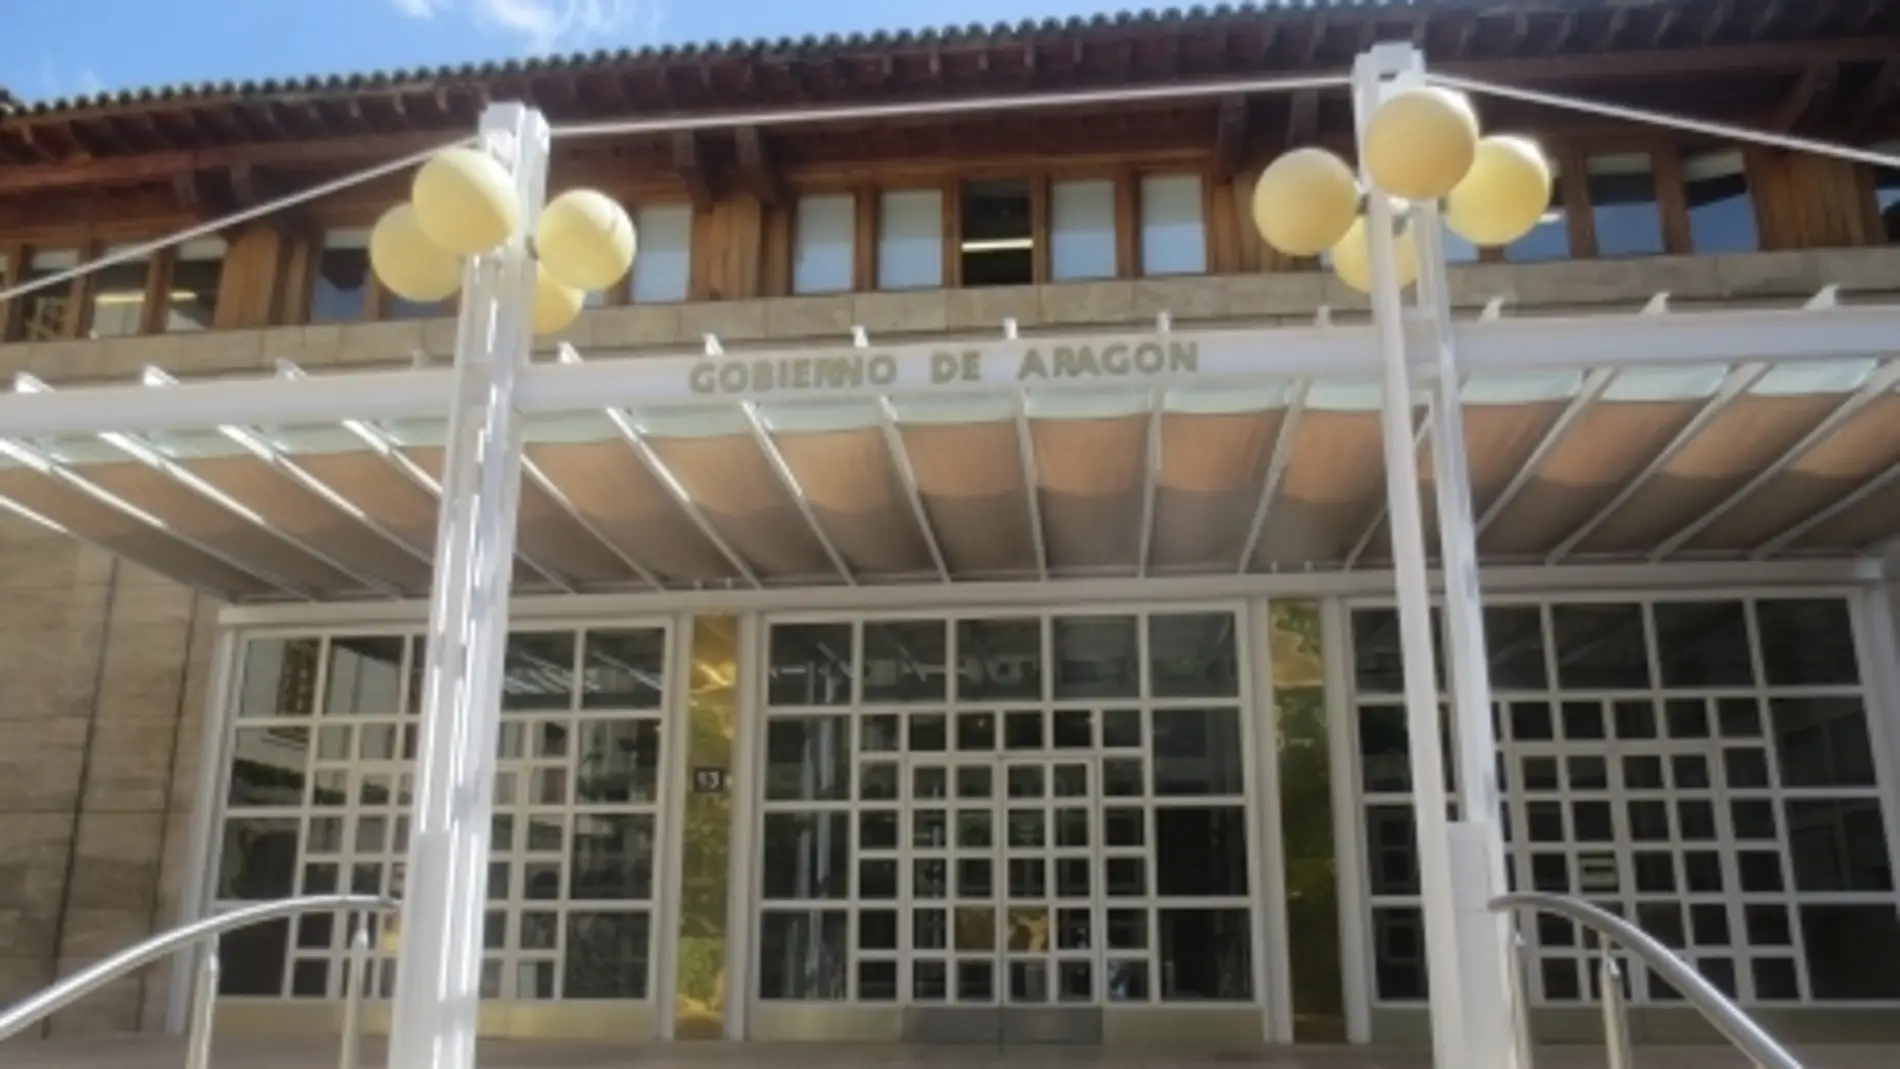 Edificio Pignatelli, sede del Ejecutivo aragonés